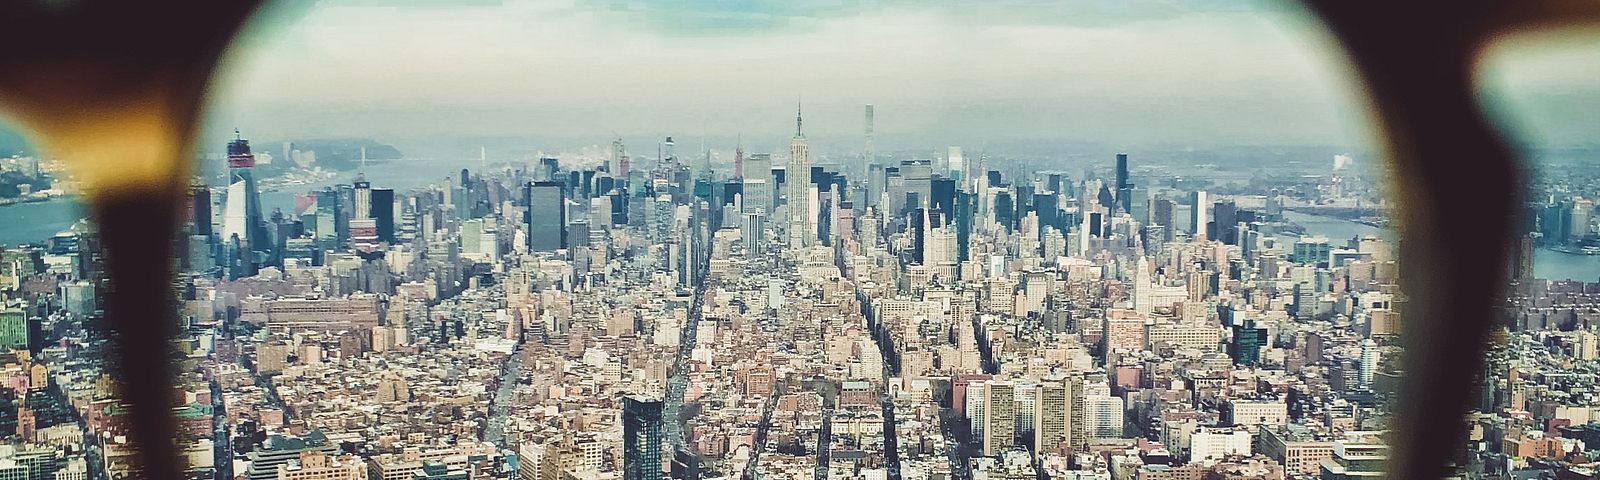 A city landscape is seen through the lens of an eyeglass